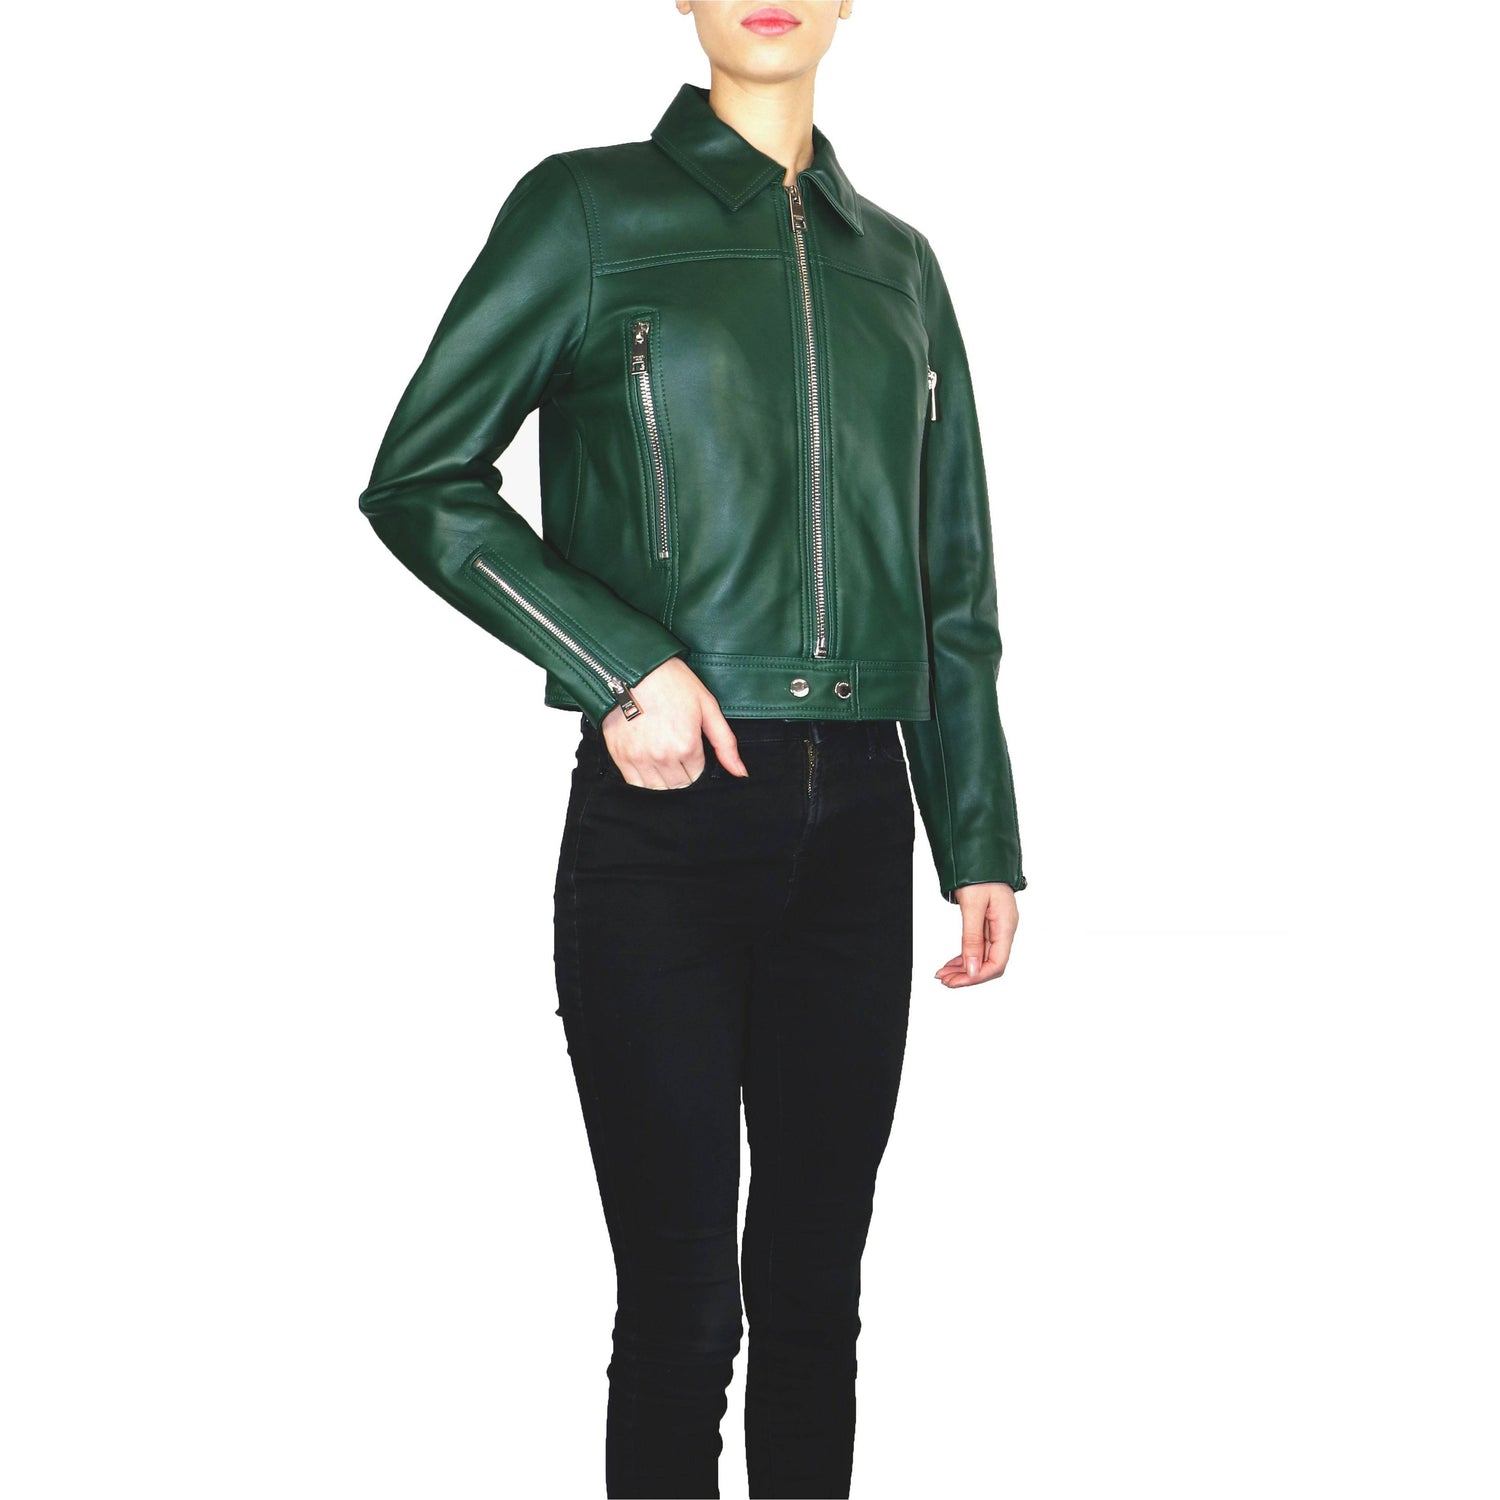 MICHAEL KORS Women's Waist Leather Jacket - Zooloo Leather